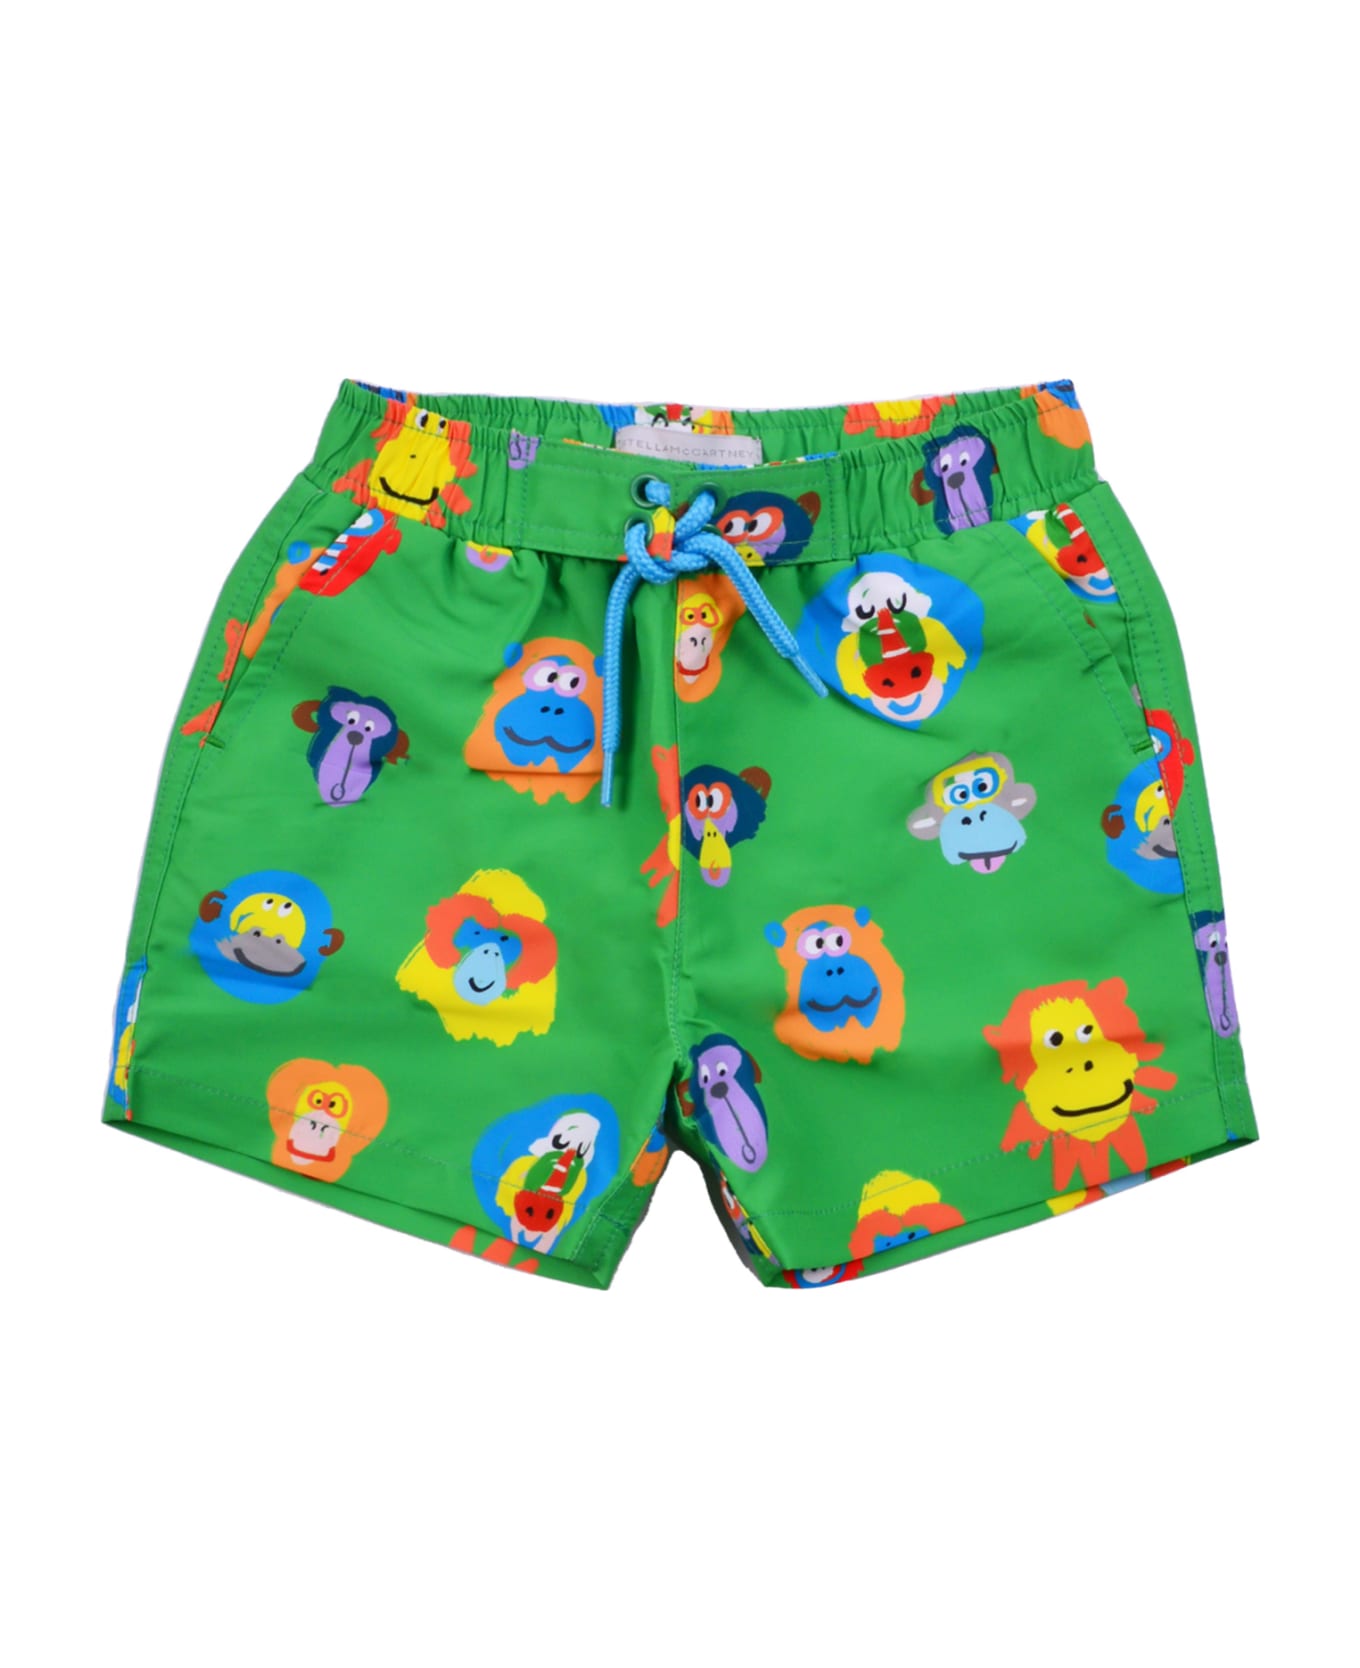 Stella McCartney Kids Printed Beach Shorts - Green